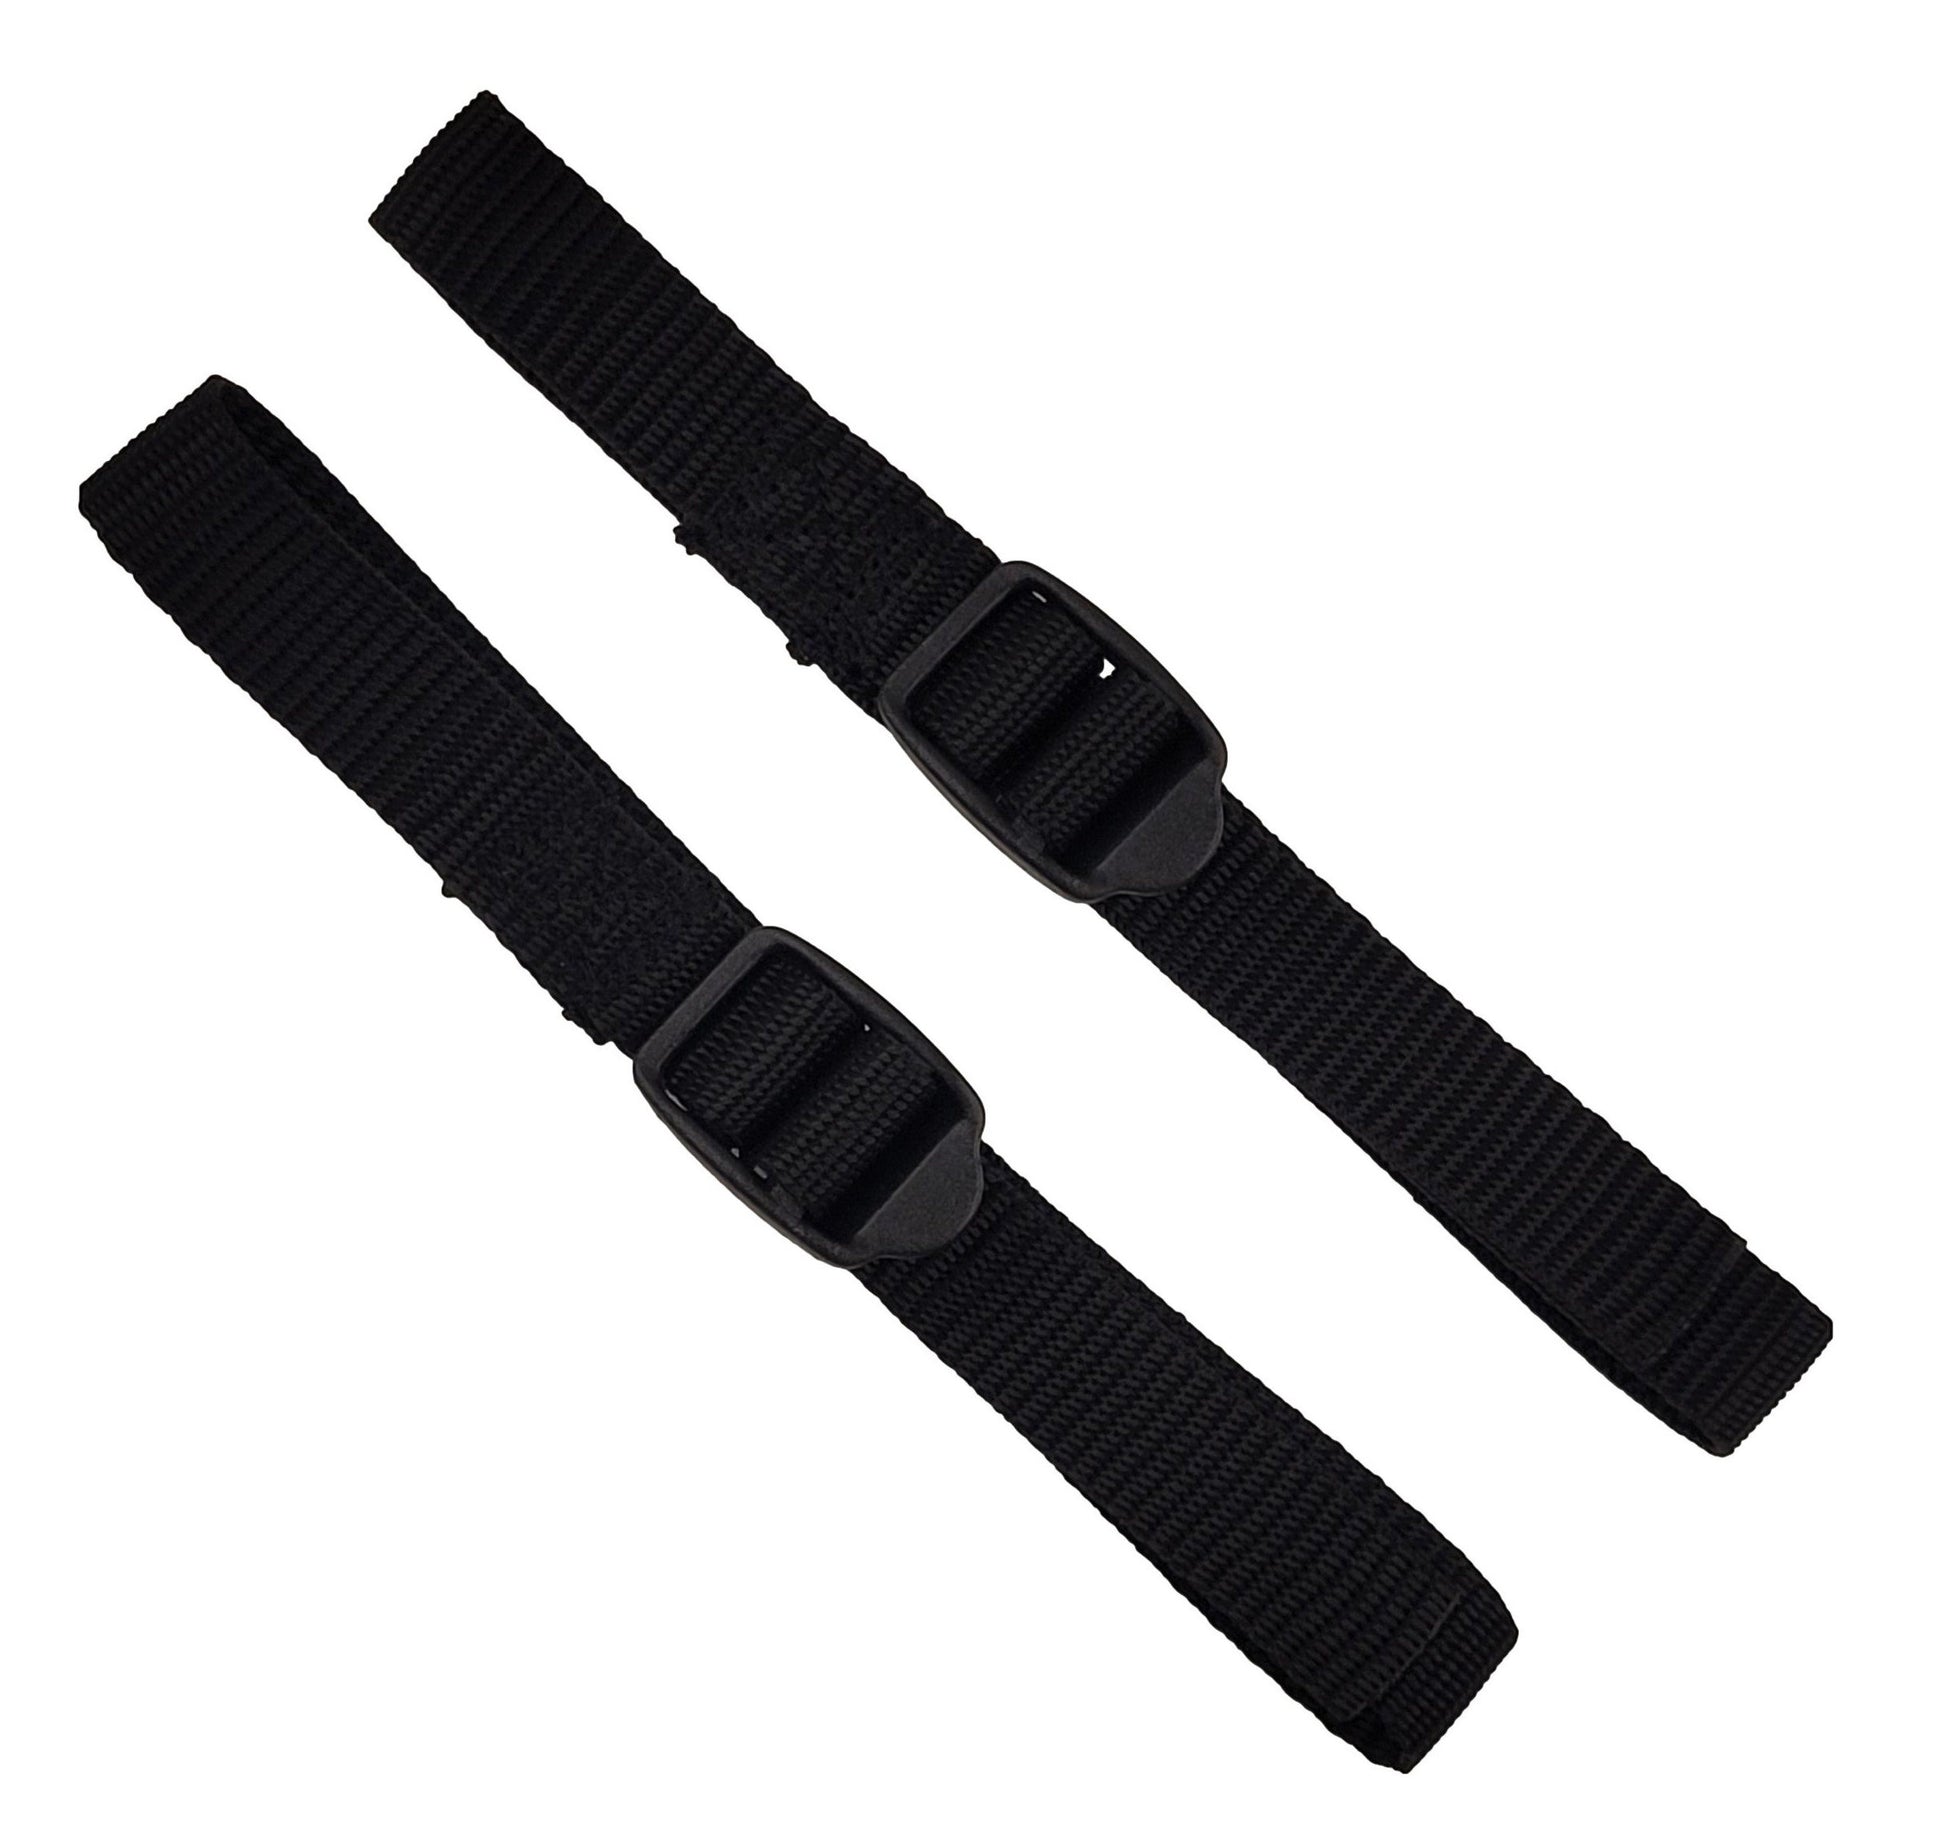 19mm webbing strap in black with ladderlock buckle (pair) (2)